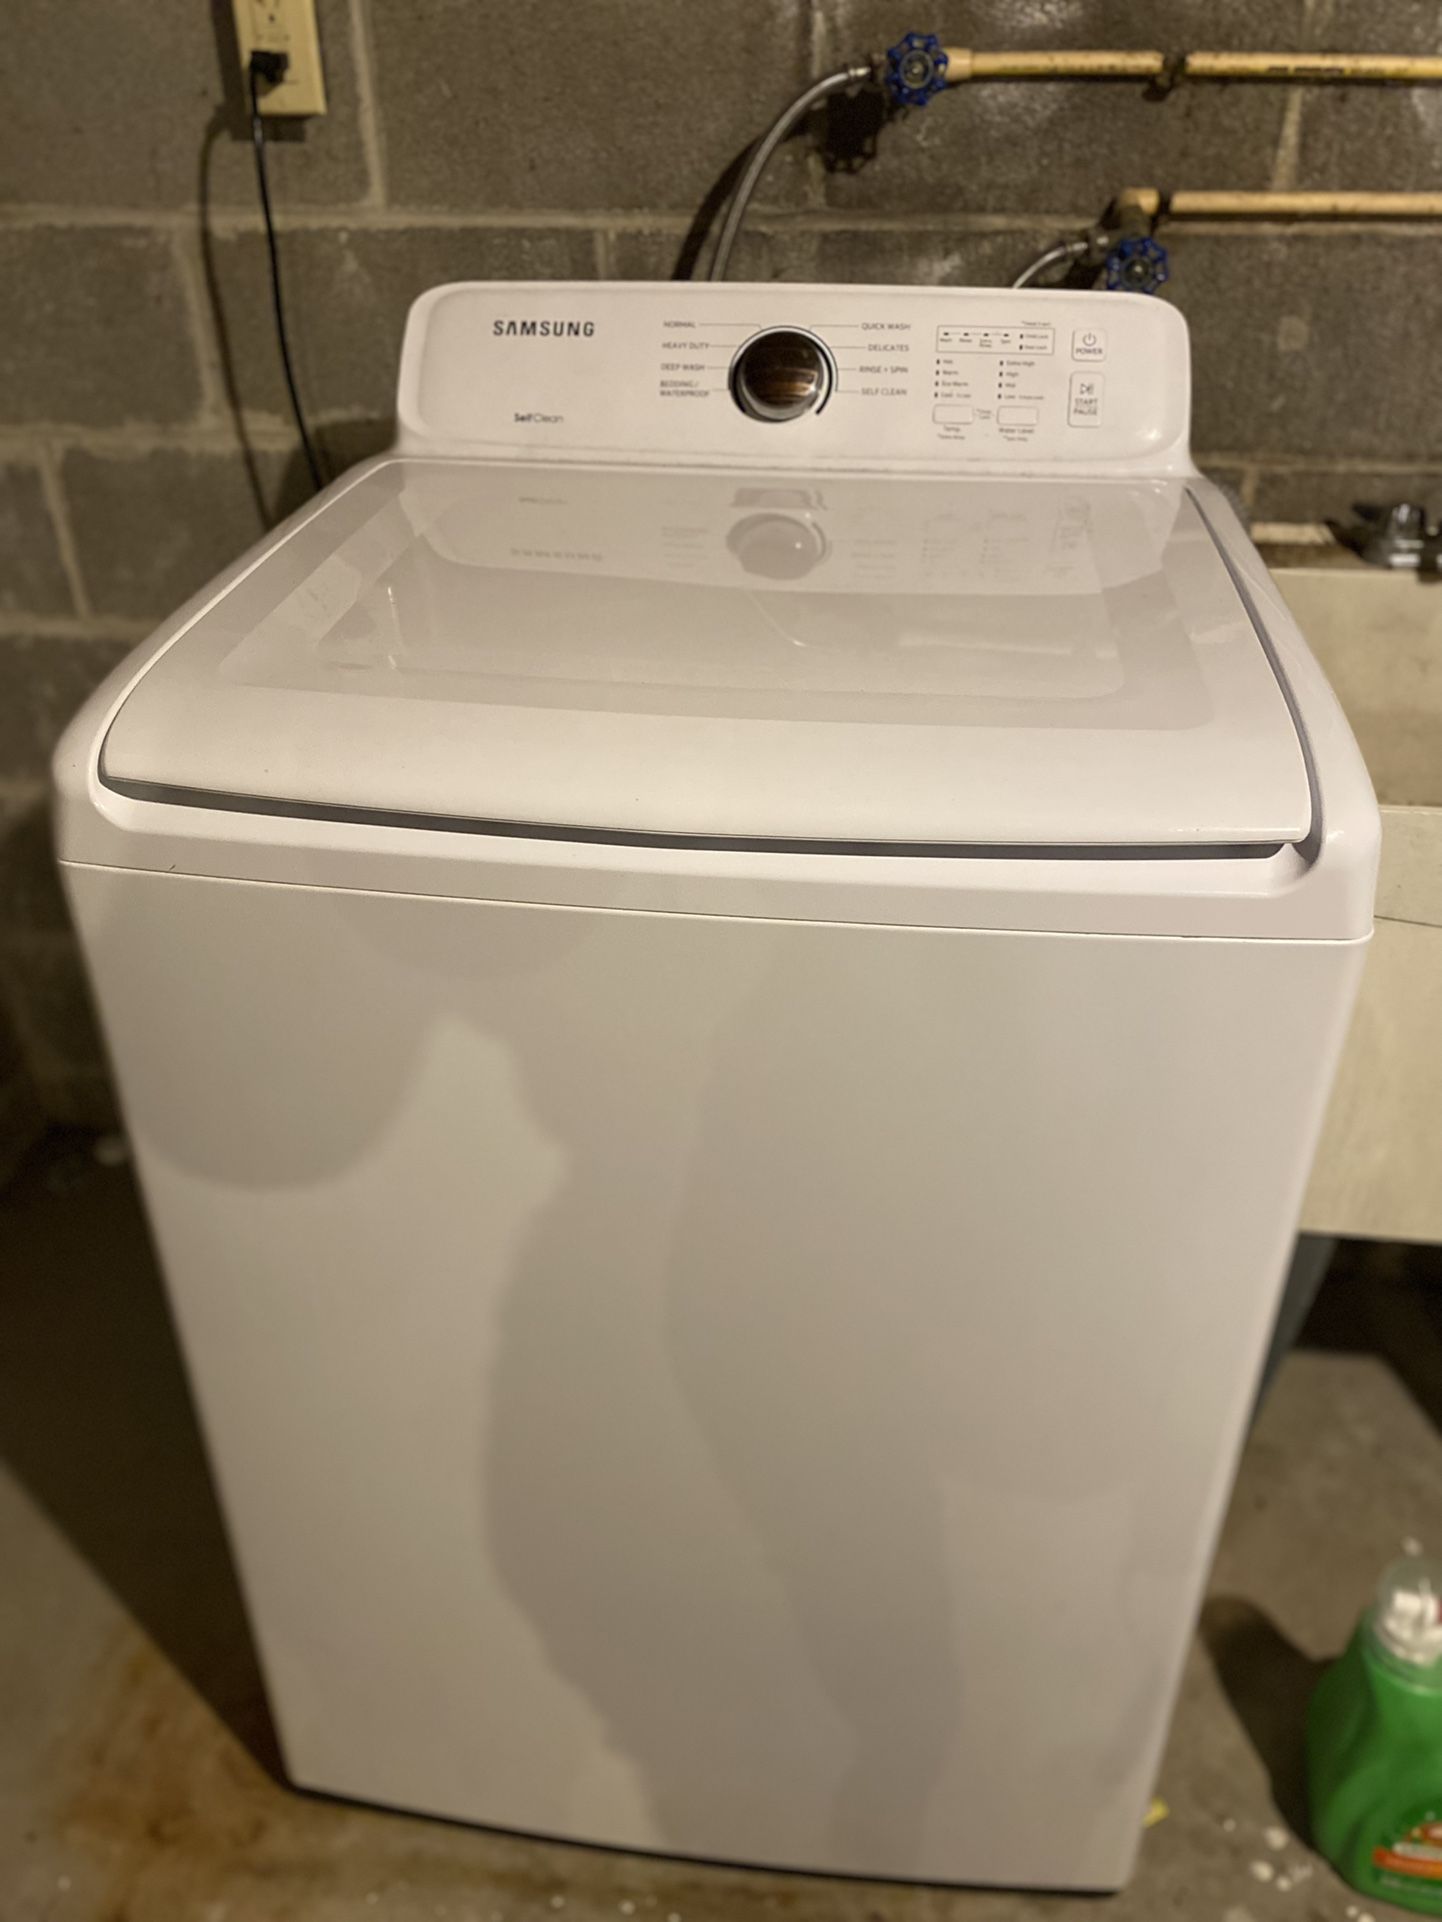 Samsung Washer And Dryer Match